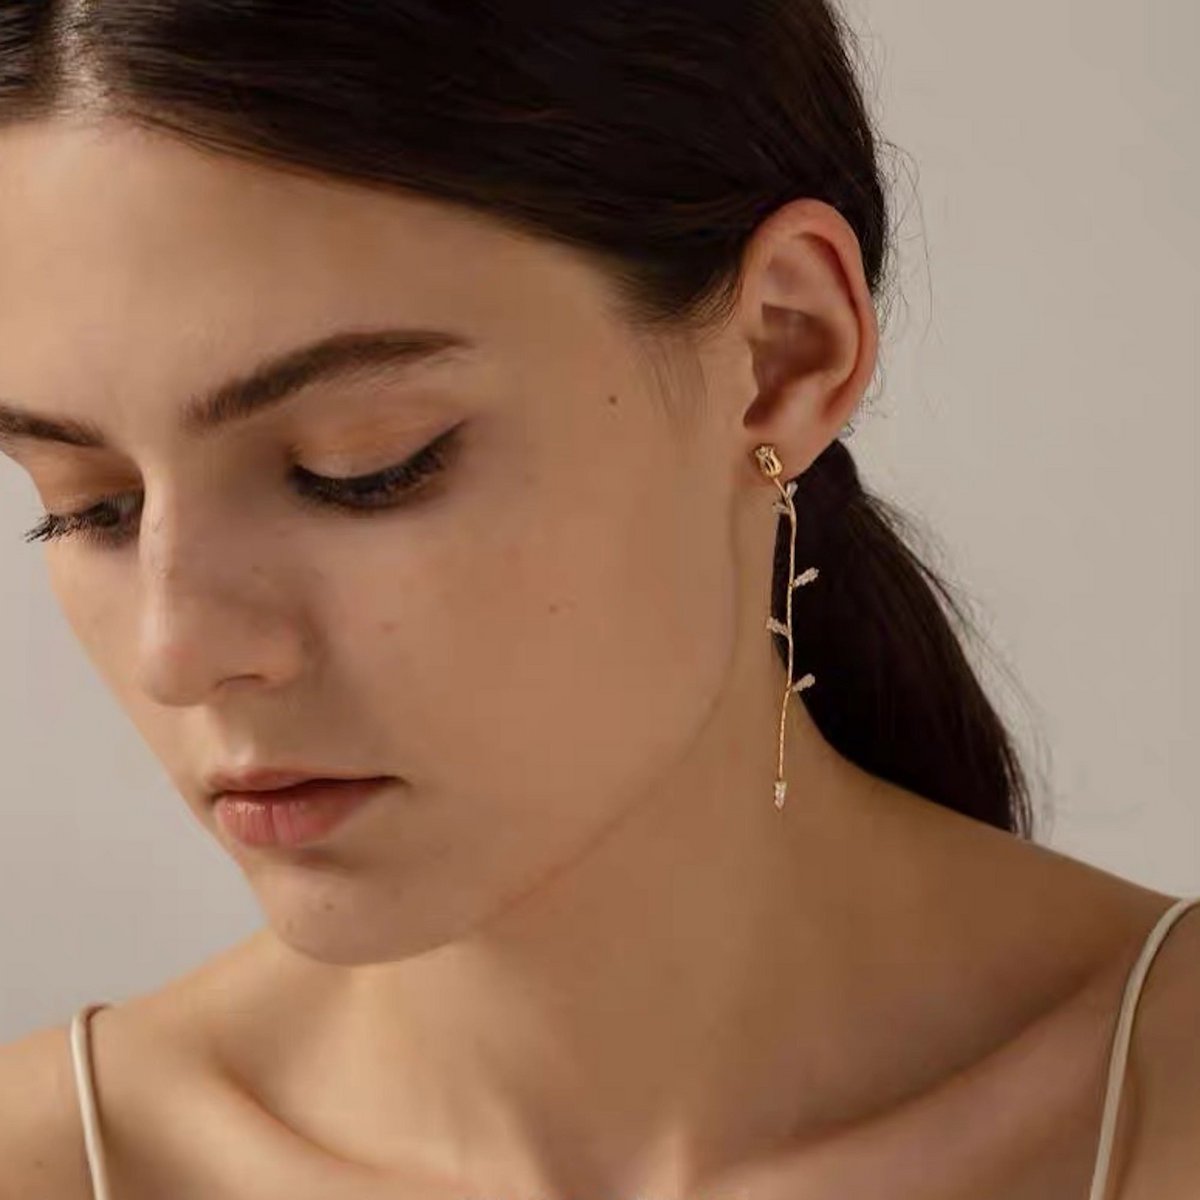 Retro Rose Gold-Plated Longline Earrings: Vintage-Inspired Drop Design